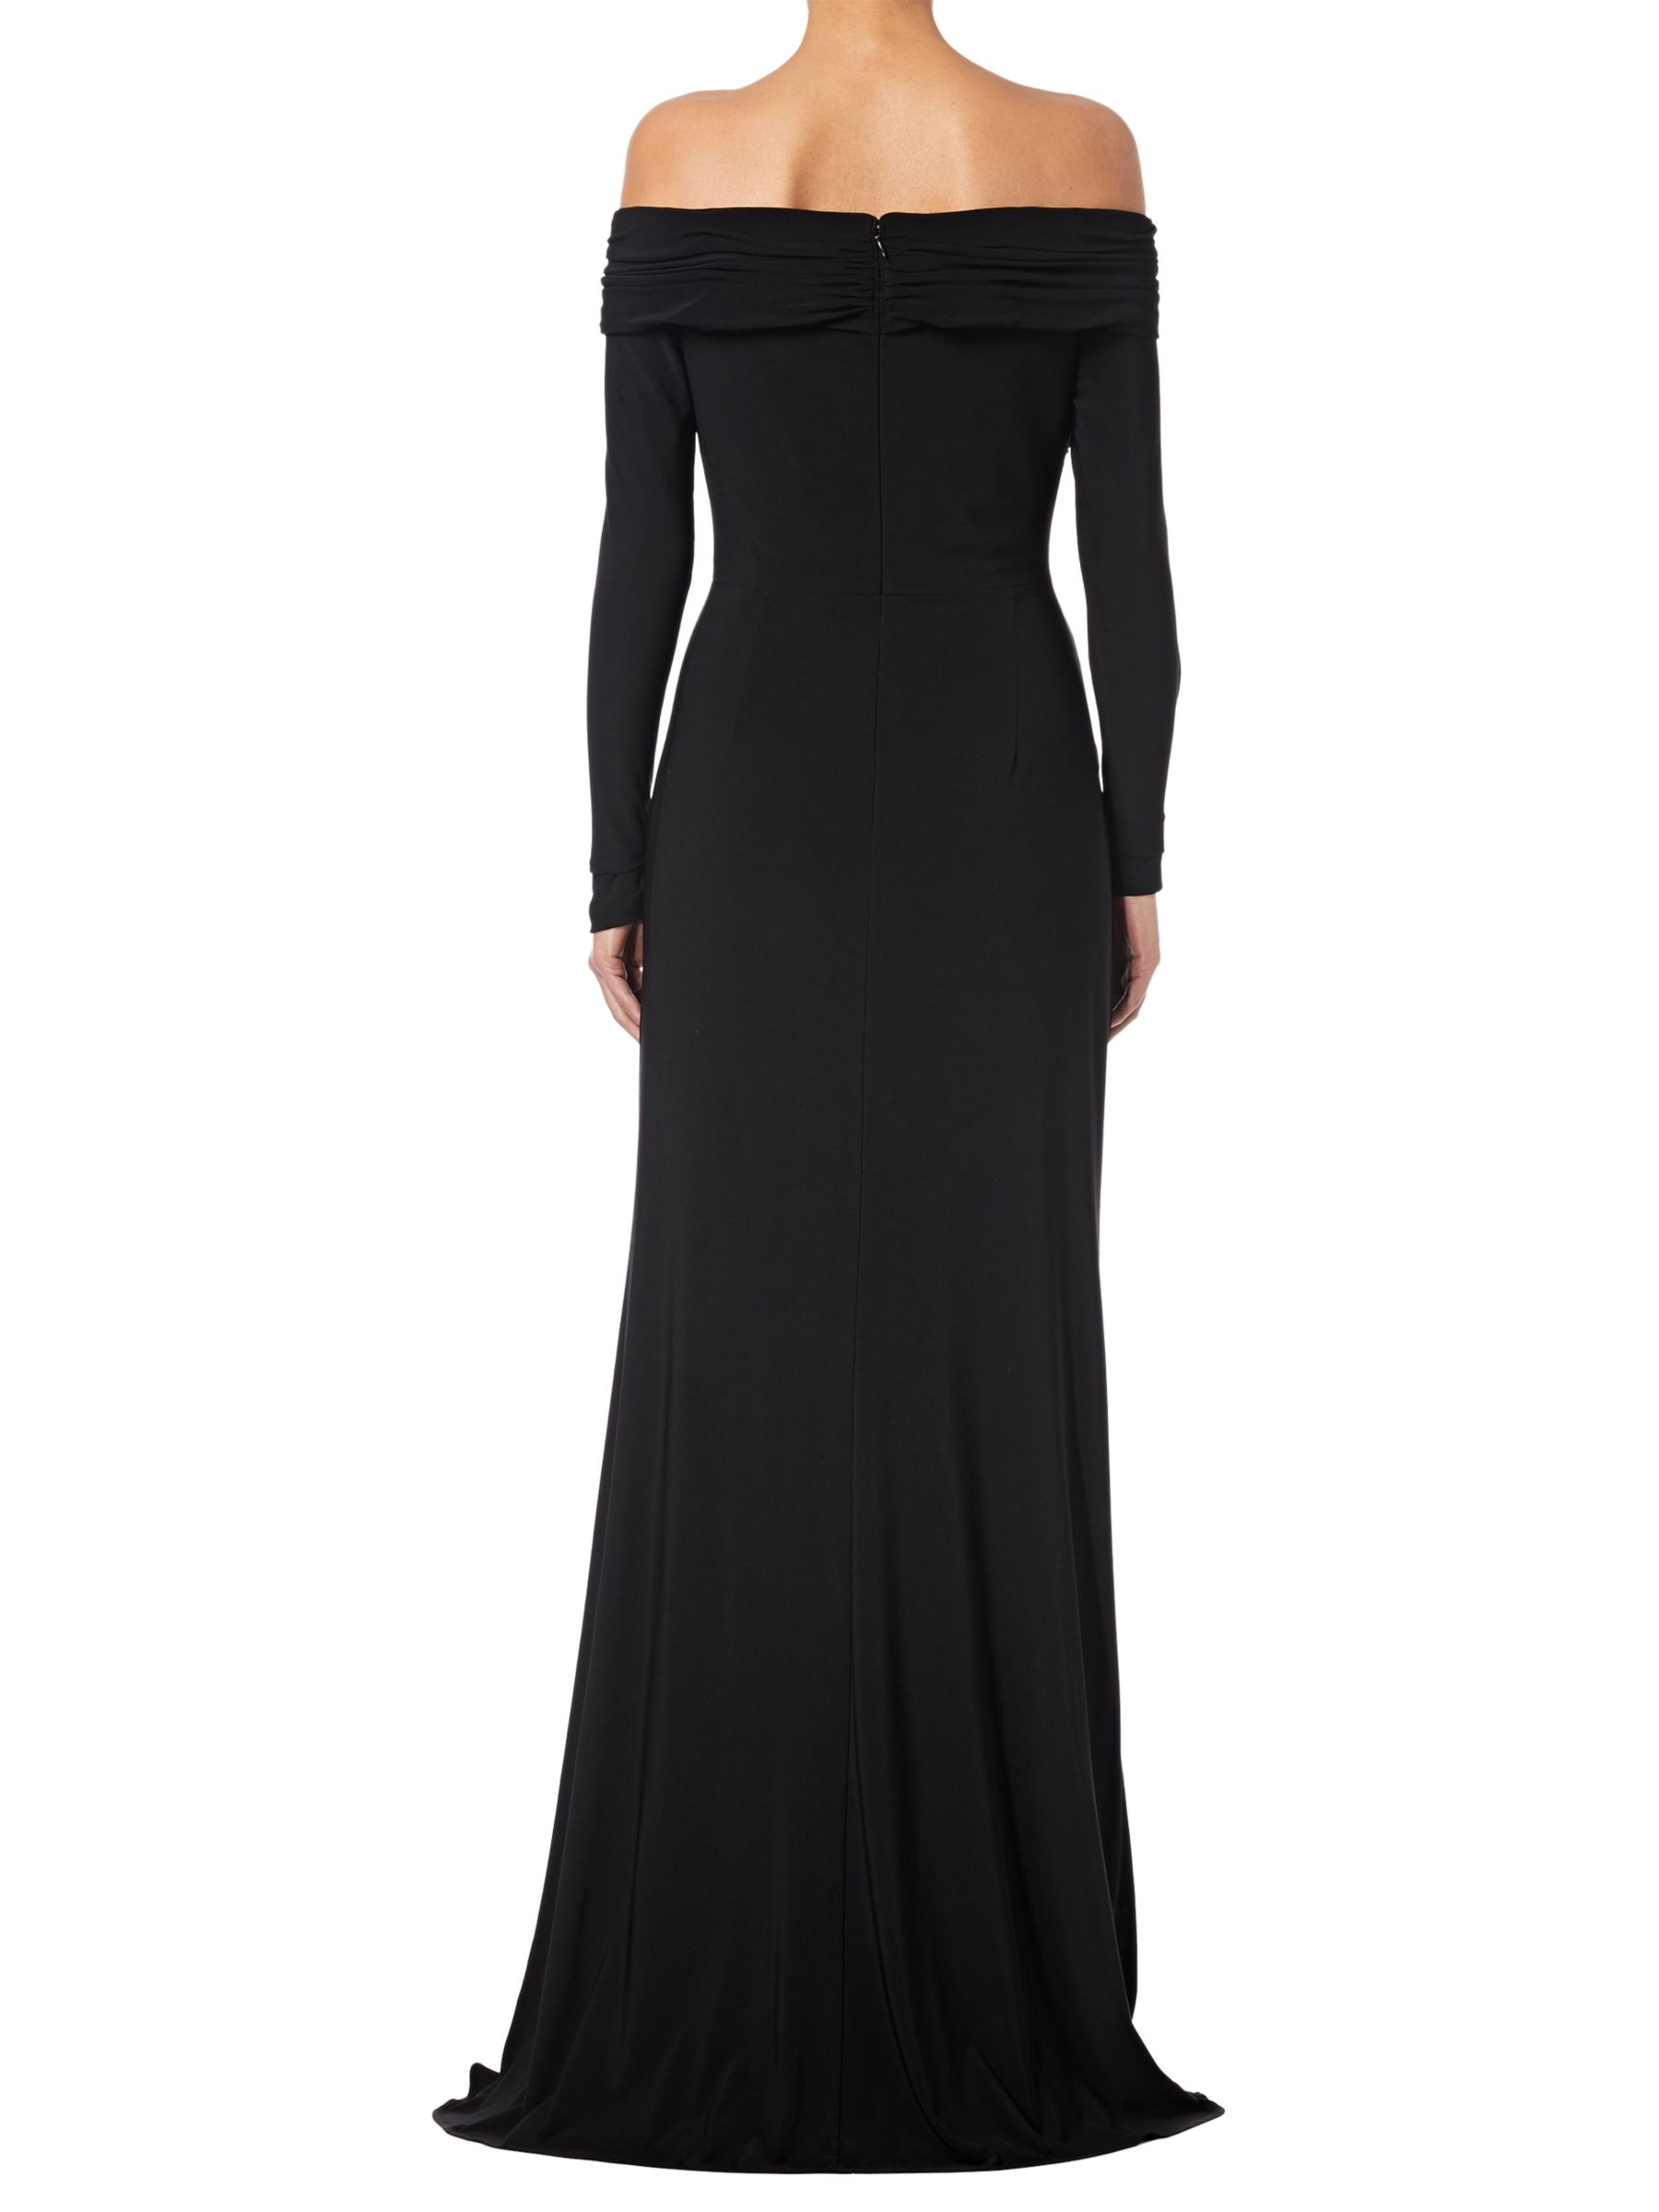 Adrianna Papell Draped Jersey Long Dress, Black